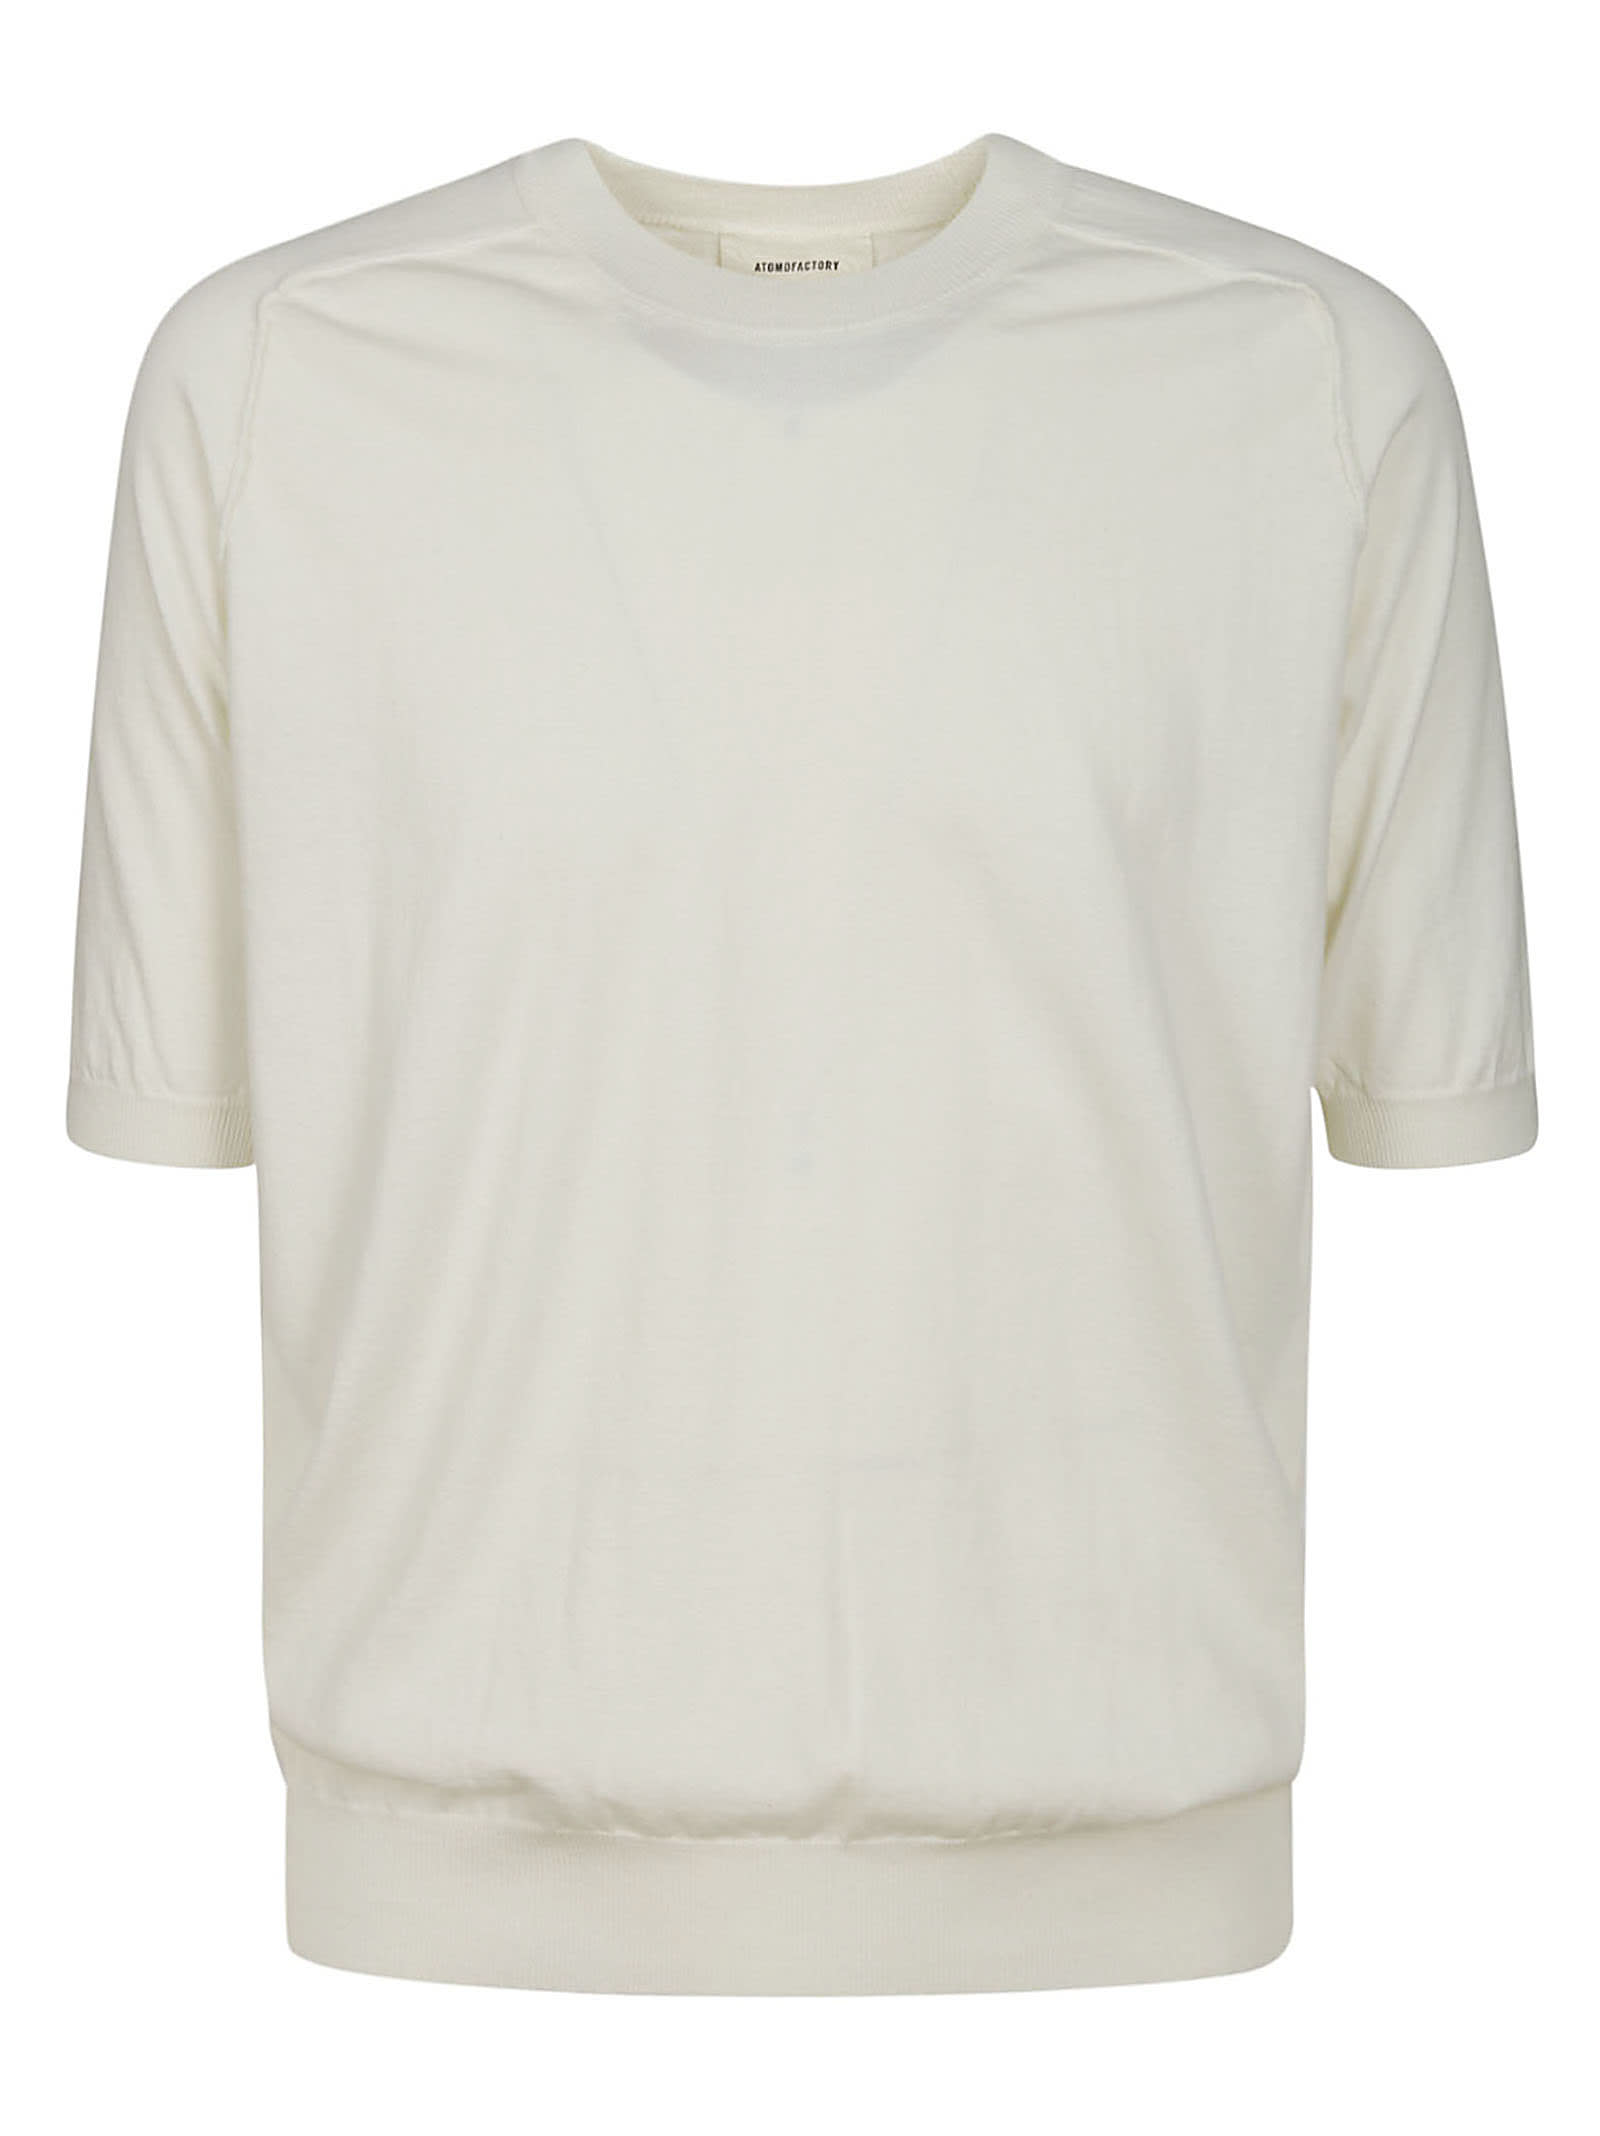 Atomo Factory T-shirt Cotone Crepe In White